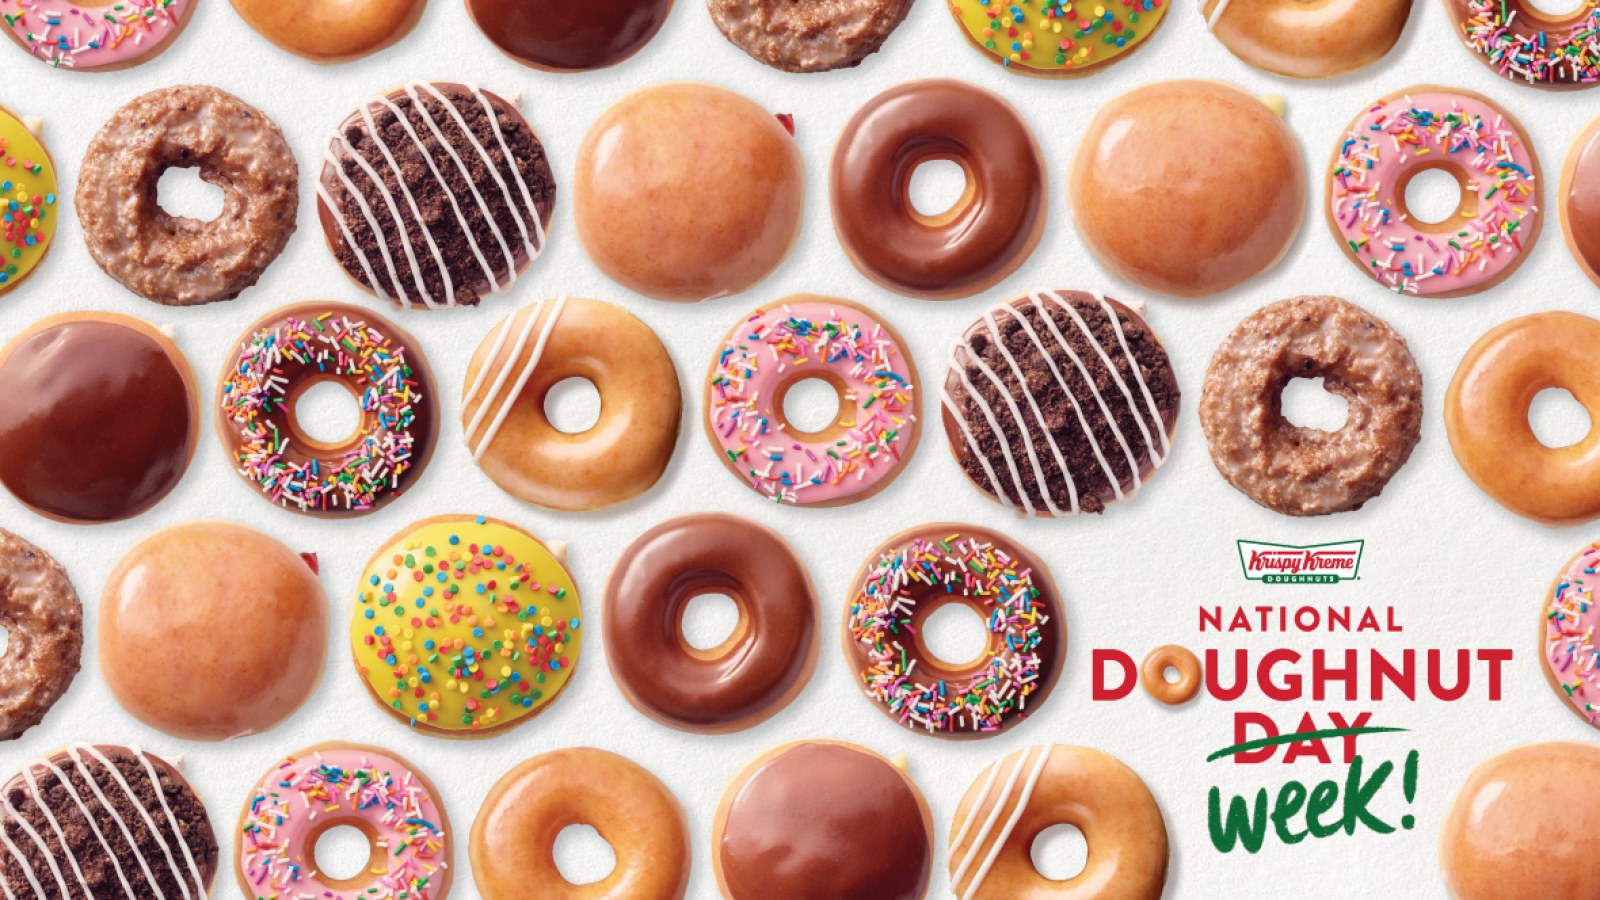 Kreme donuts krispy birthday celebrate giving away its